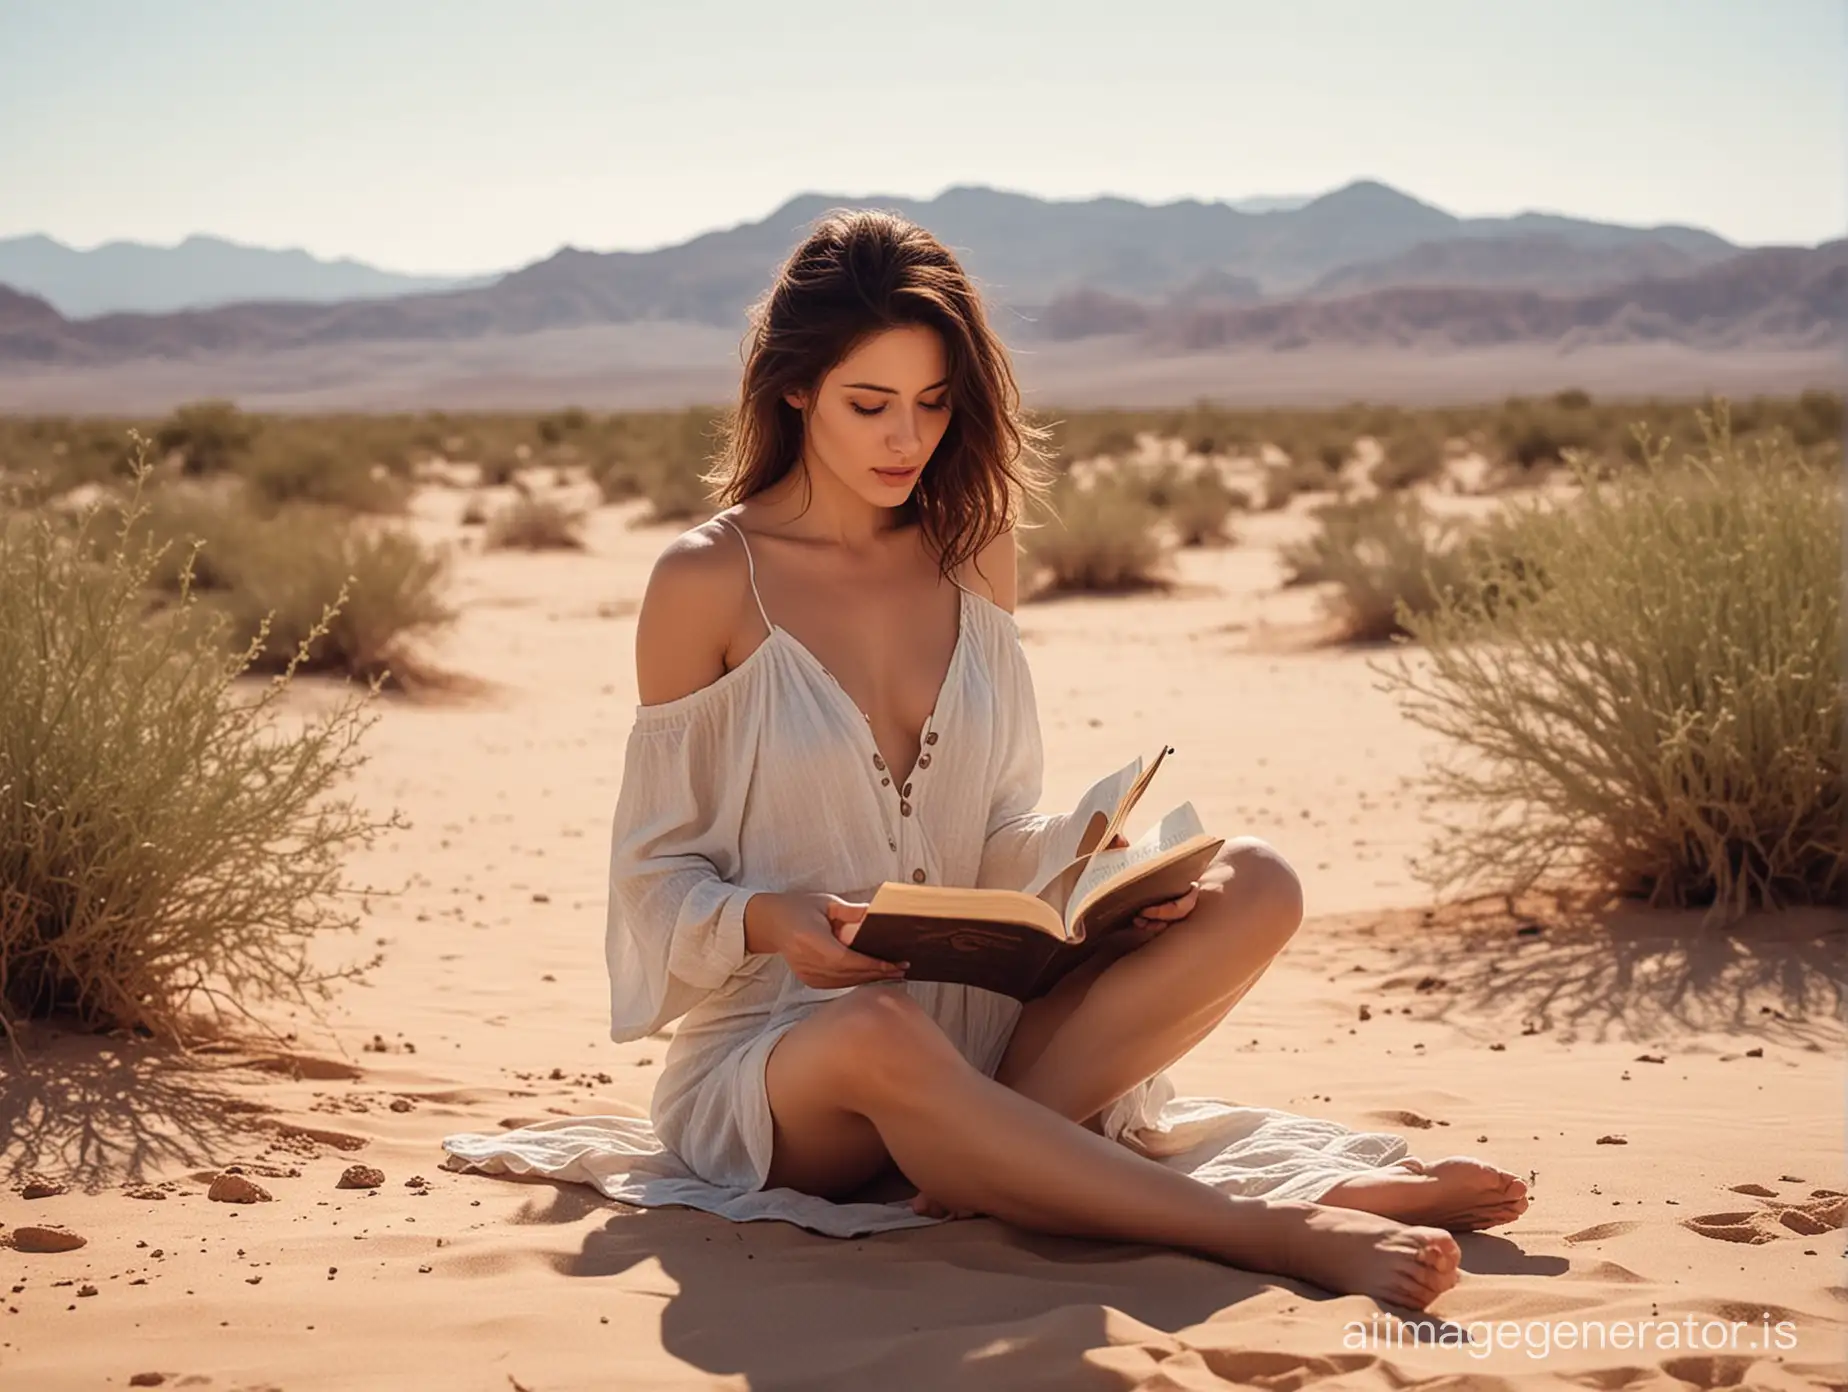 Poetic-Woman-Reading-Poetry-in-the-Desert